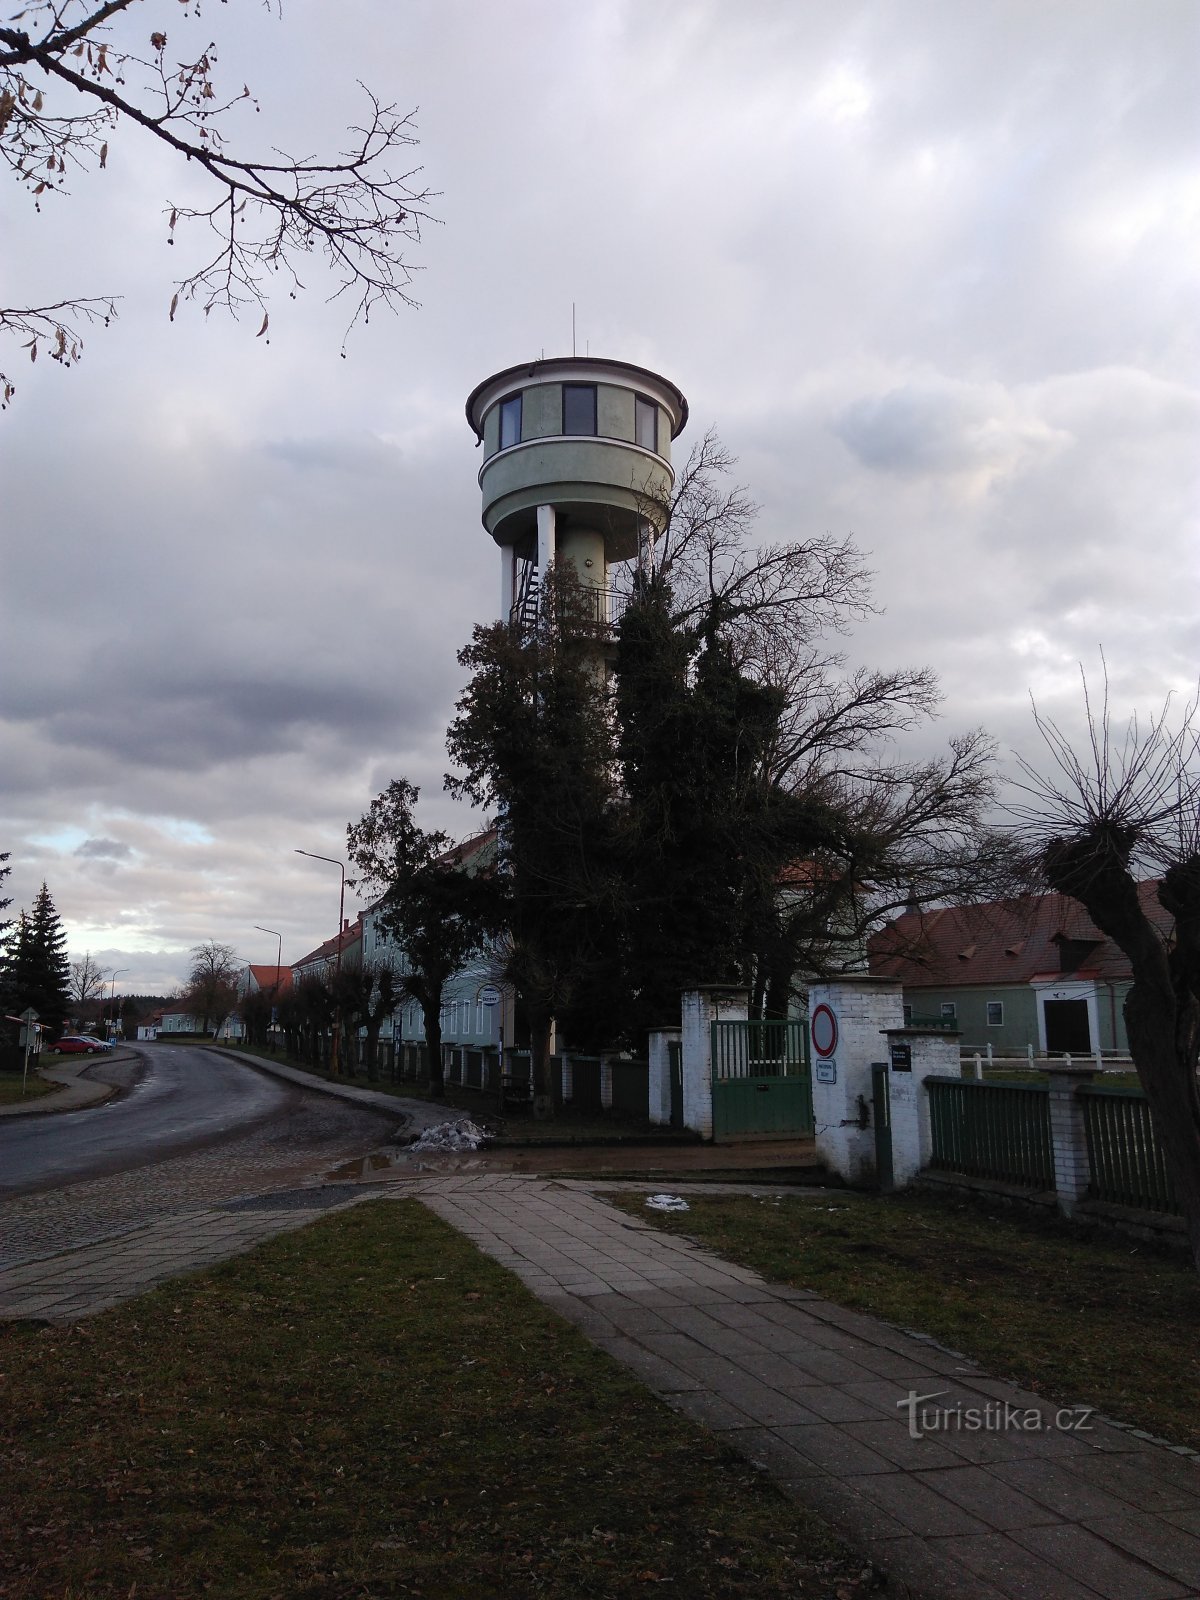 Kladruby nad Labem - Tháp quan sát Vodojem